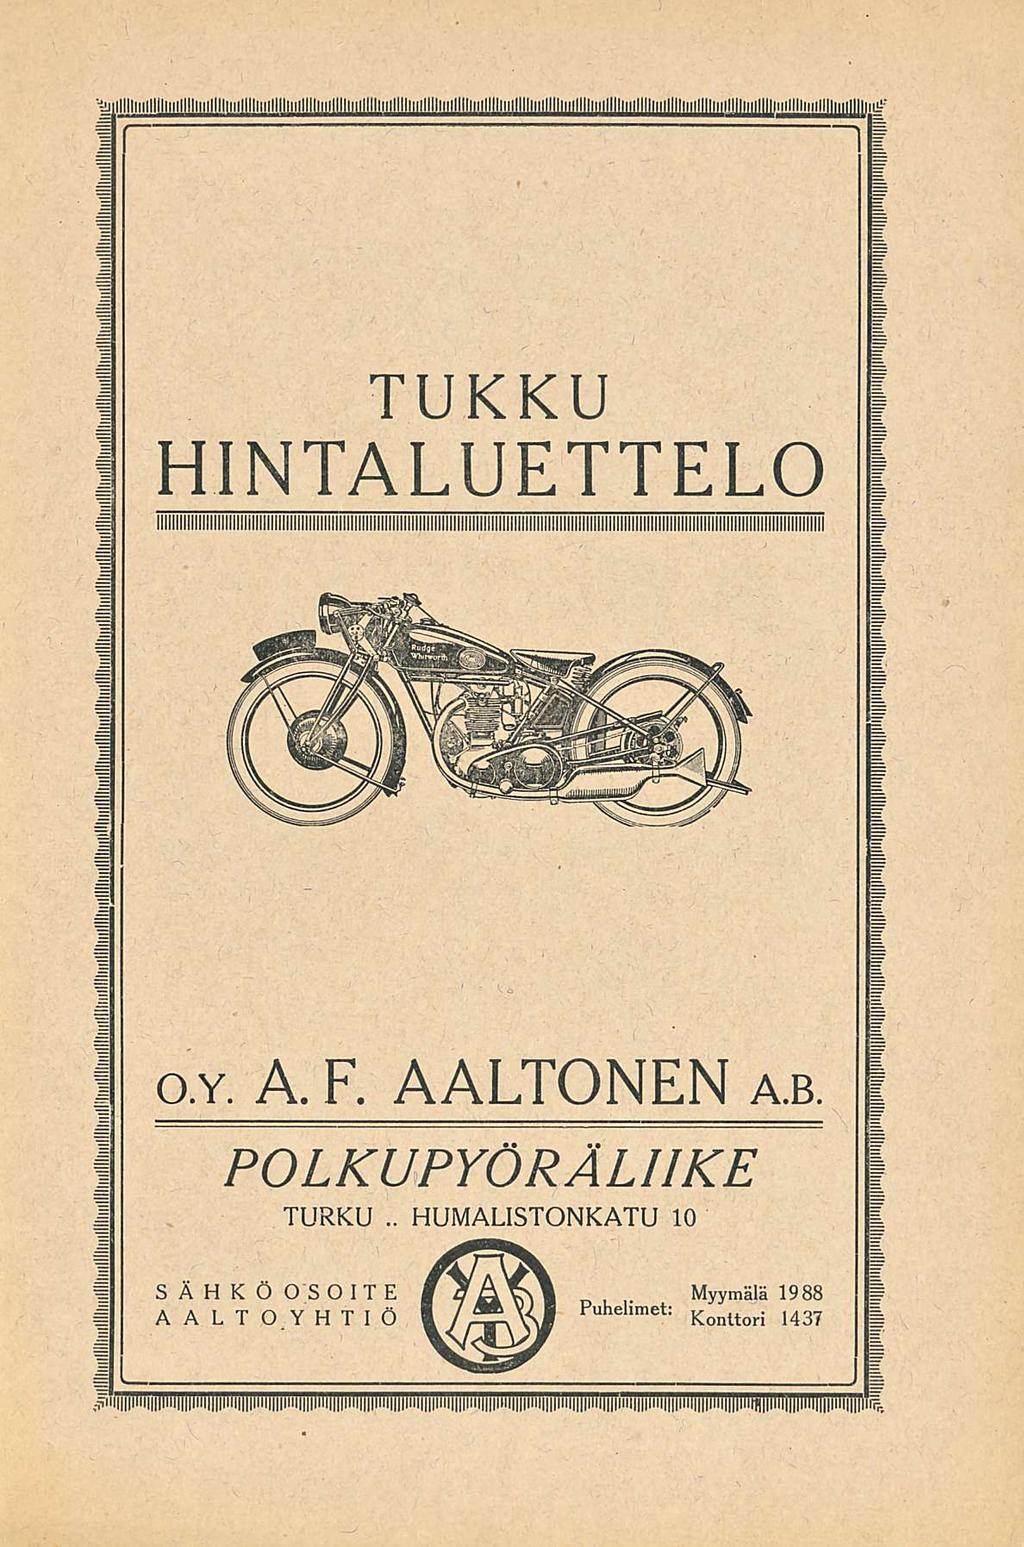 HUMALISTONKATU TUKKU HINTALUETTELO o.y. A.F. AALTONEN a.b.